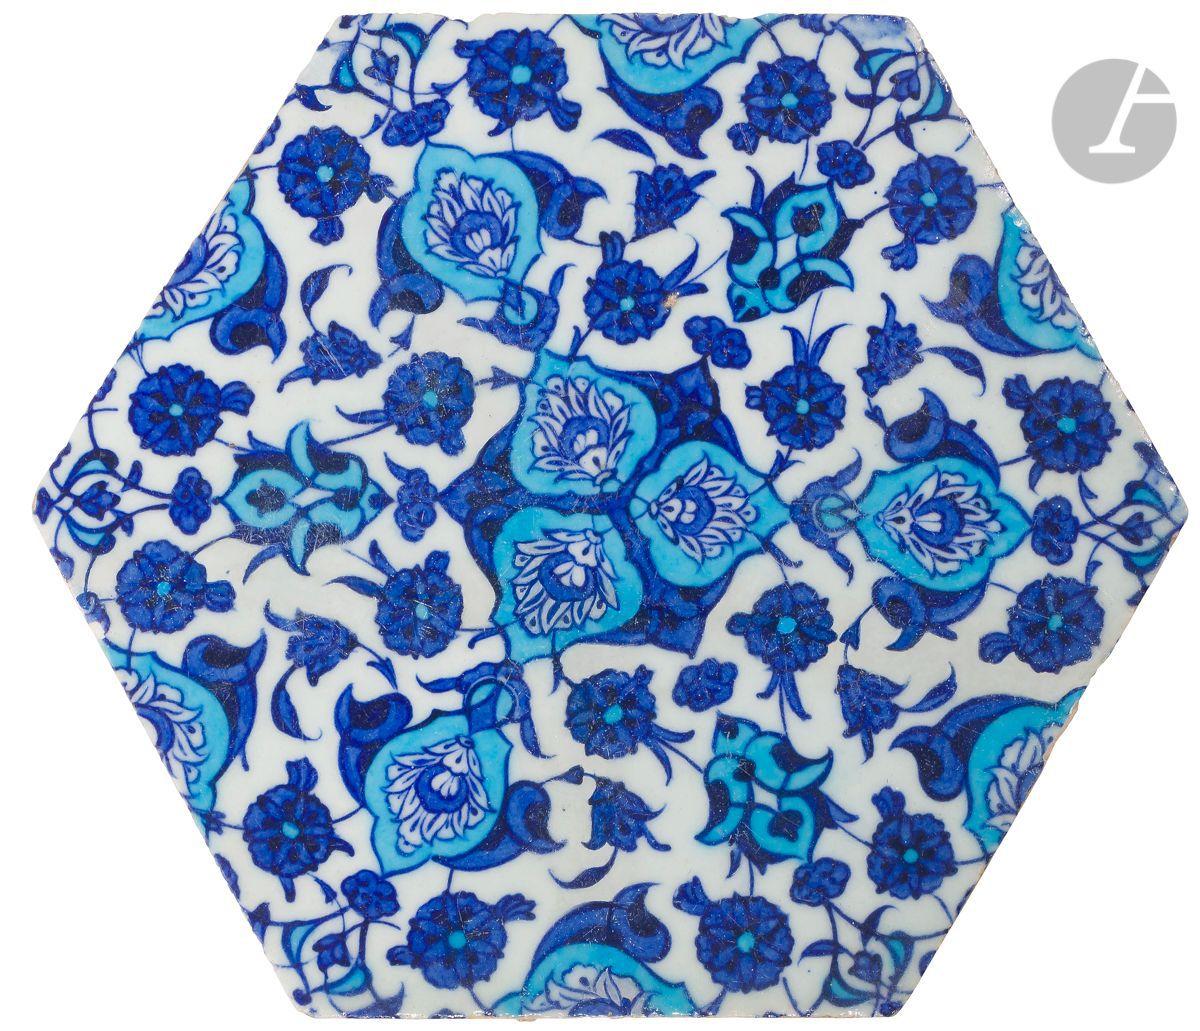 Carreau hexagonal a decor bleu et blanc turquie ottomane iznik vers 1520 50